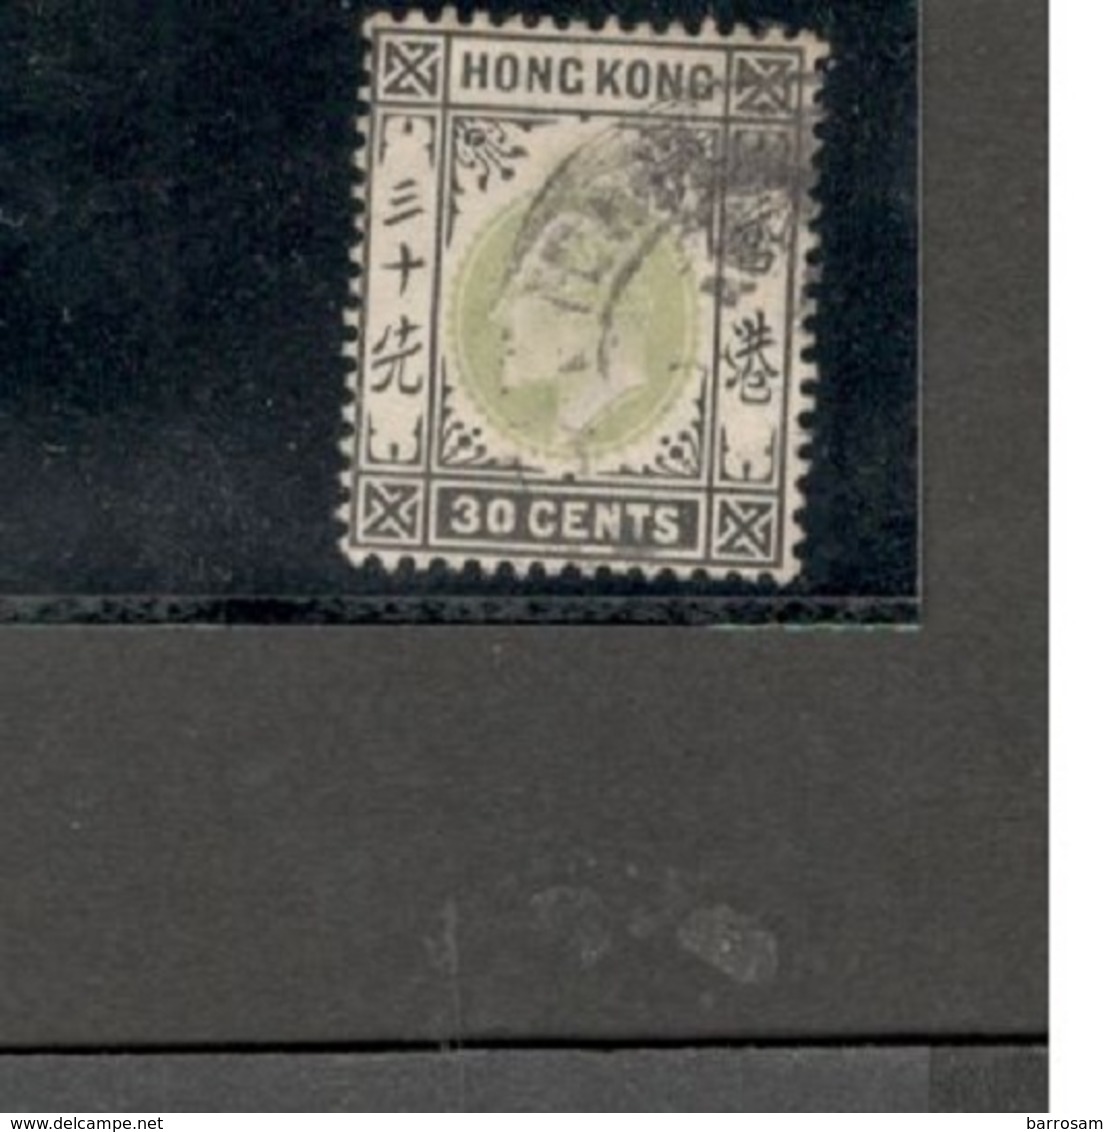 HongKong1903:Michel 69 Used Cat. $36.00Value - Unused Stamps